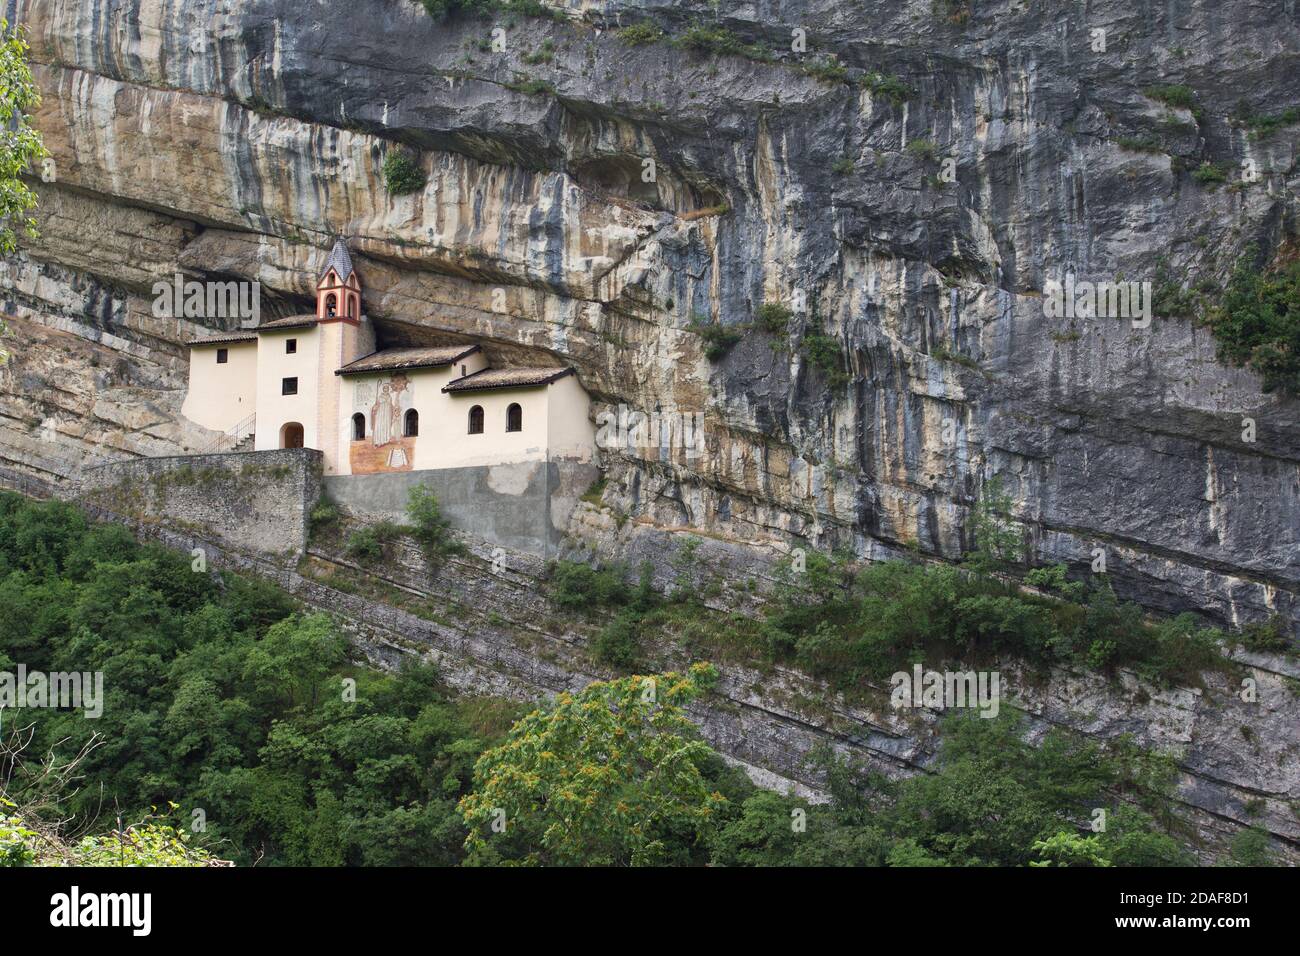 The Saint Columbanus Hermitage inhabited by hermits from 753 AD - Trambileno, near Rovereto, Trentino, Italy - Irish Spiritual Heritage in Italy Stock Photo